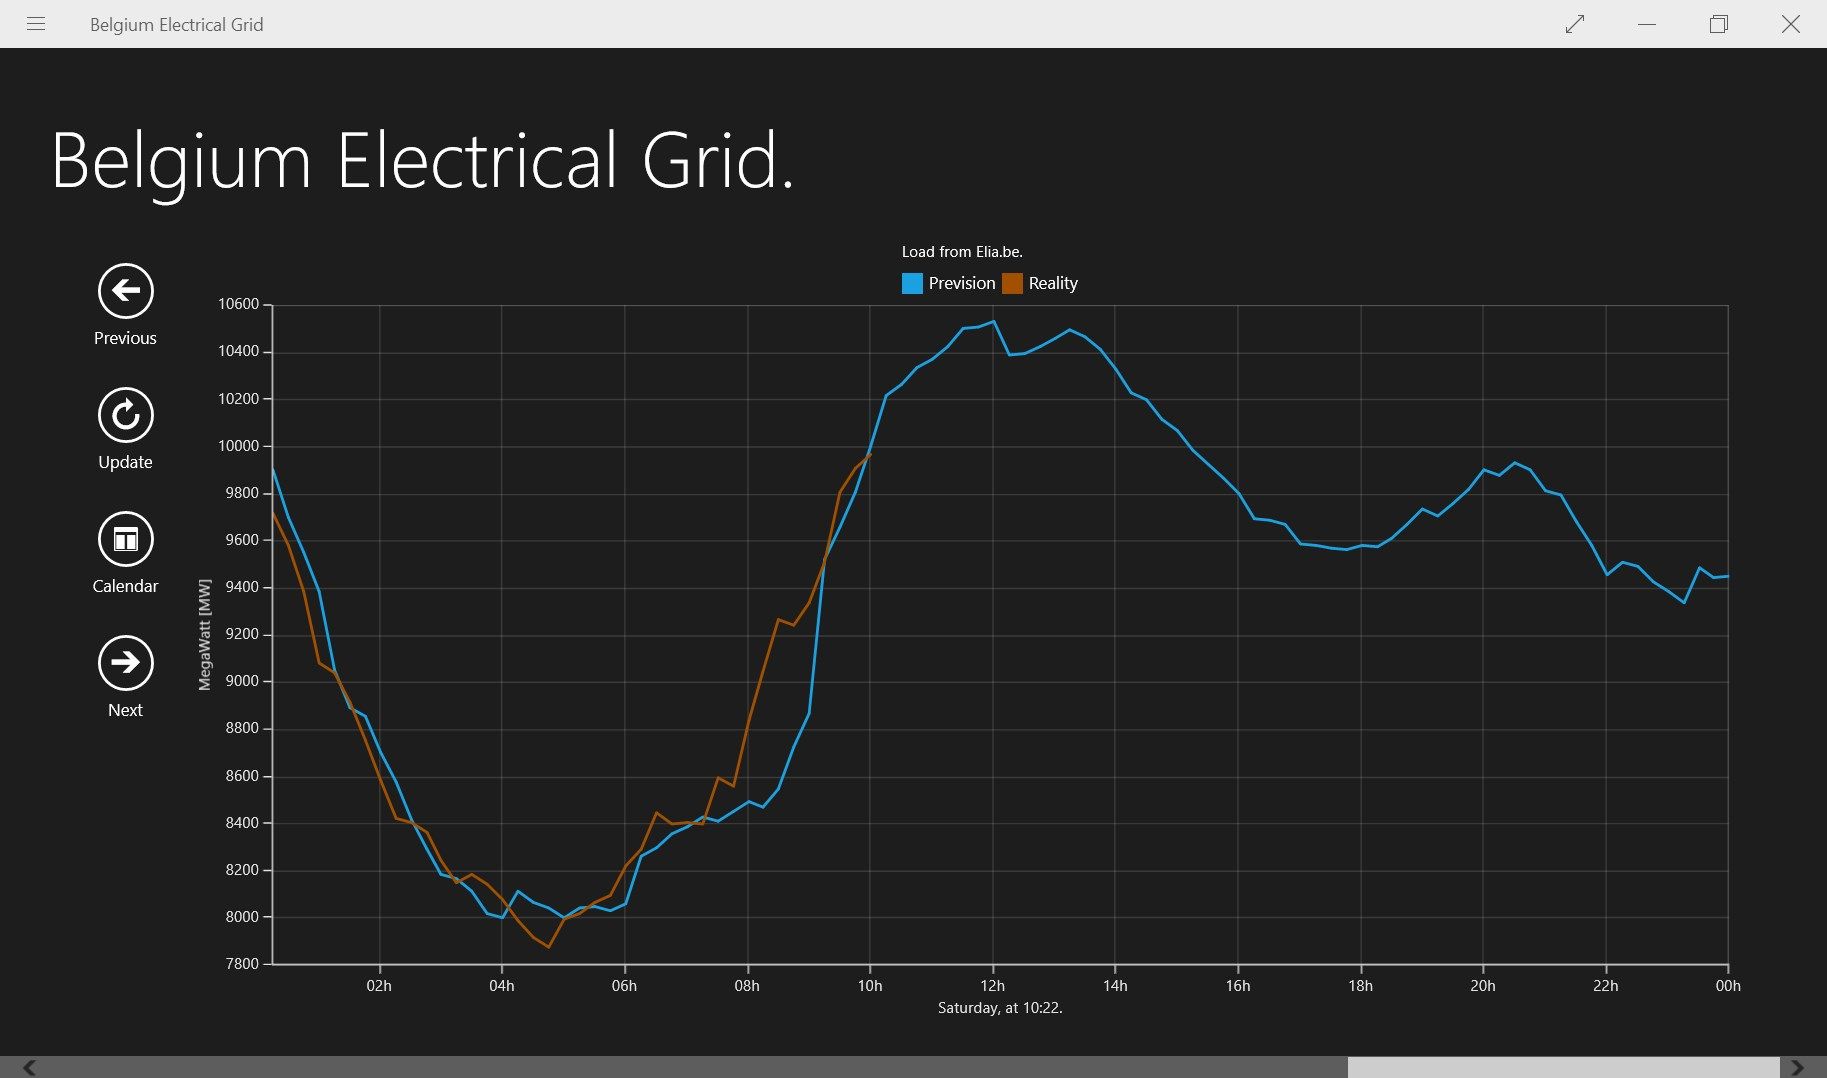 Belgium electrical grid load graph